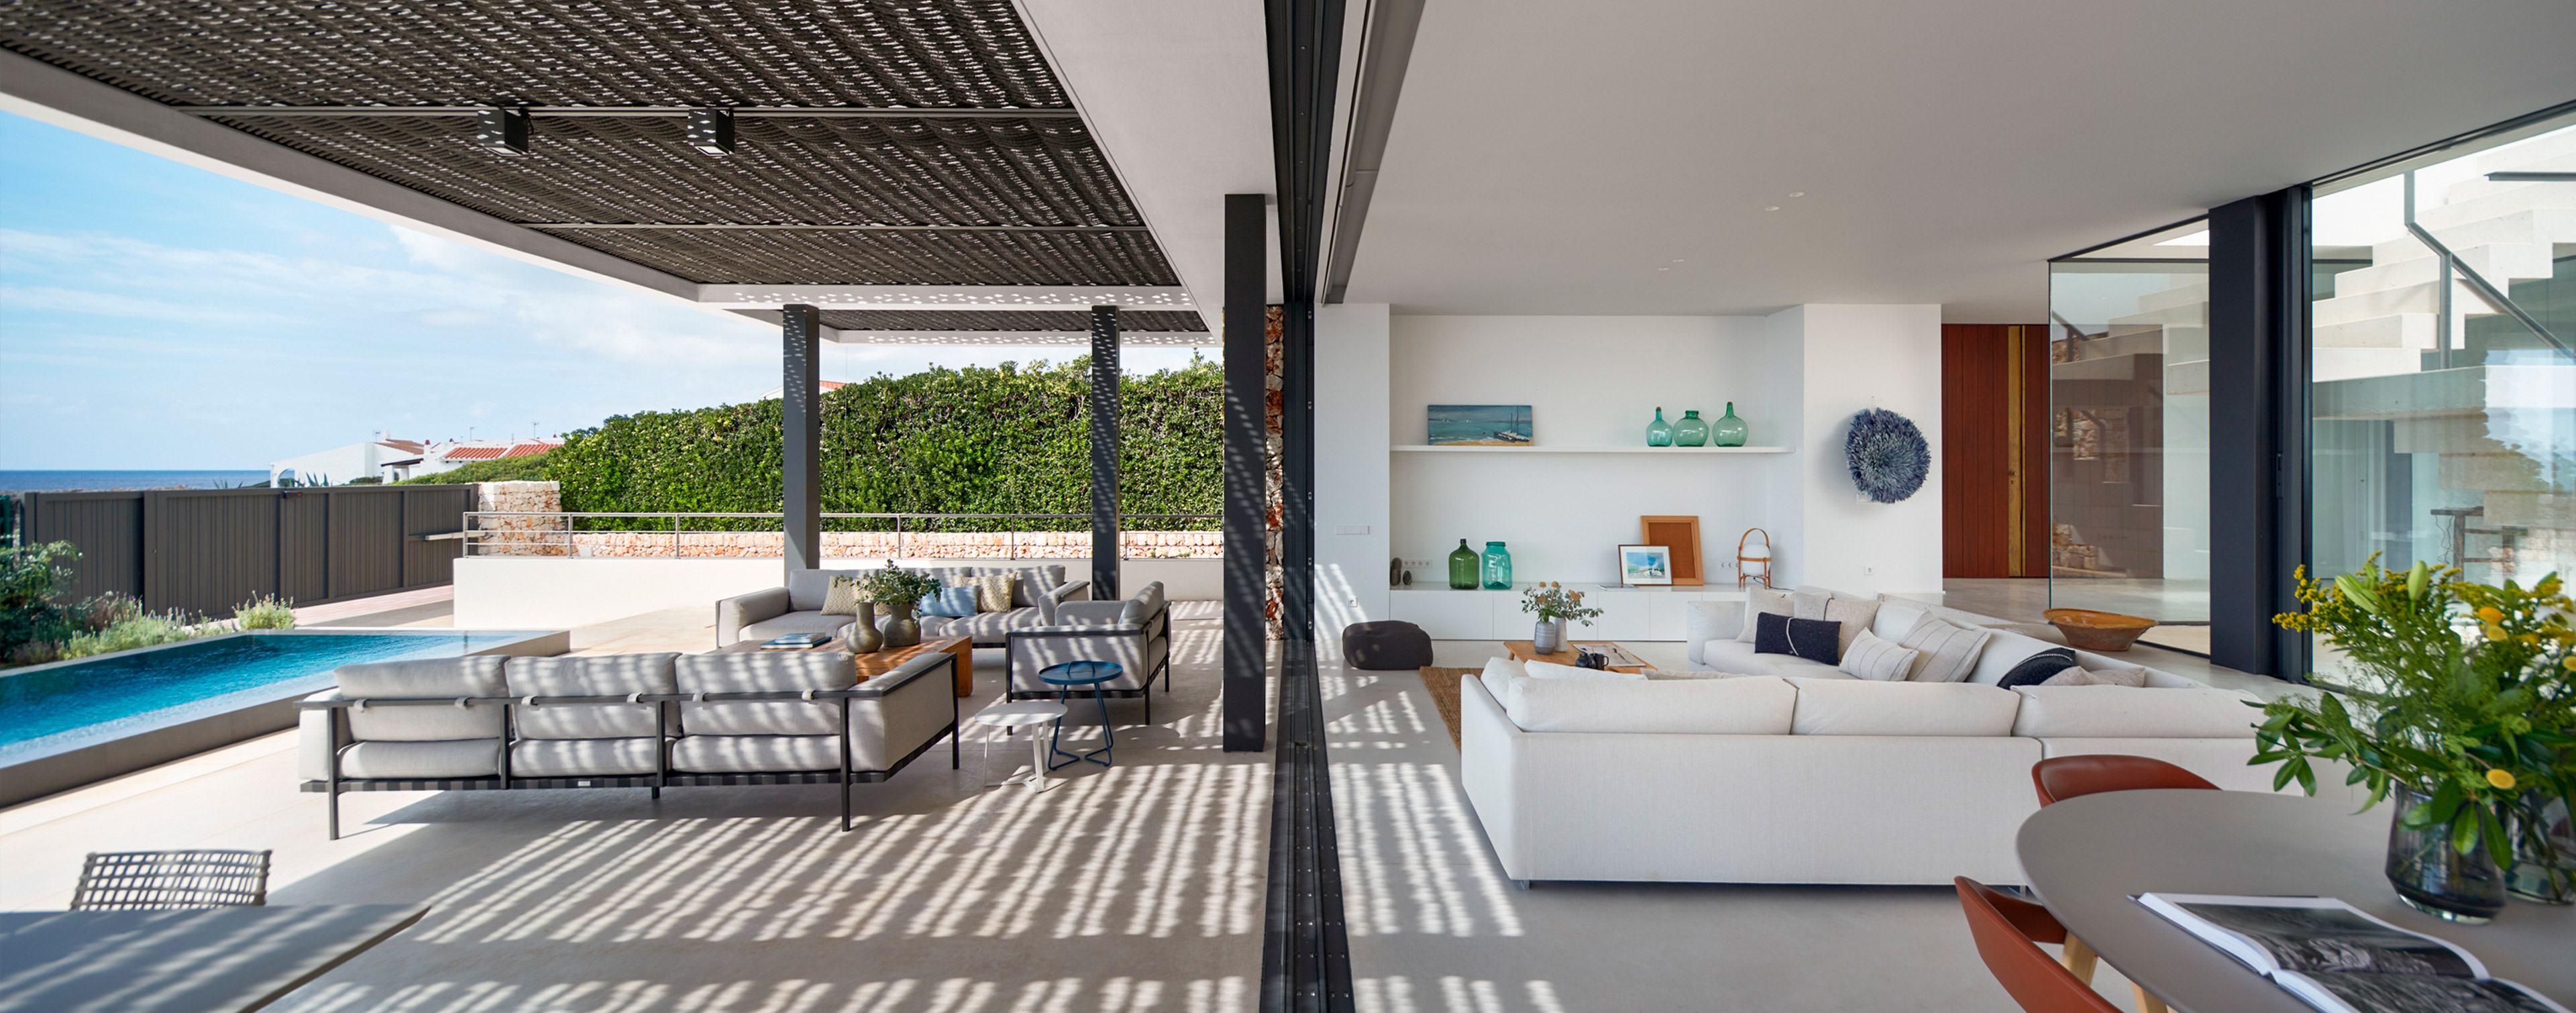 luv studio luxury architects menorca binibequer house IMG 02 - LUV Studio - Architecture & Design - Barcelona